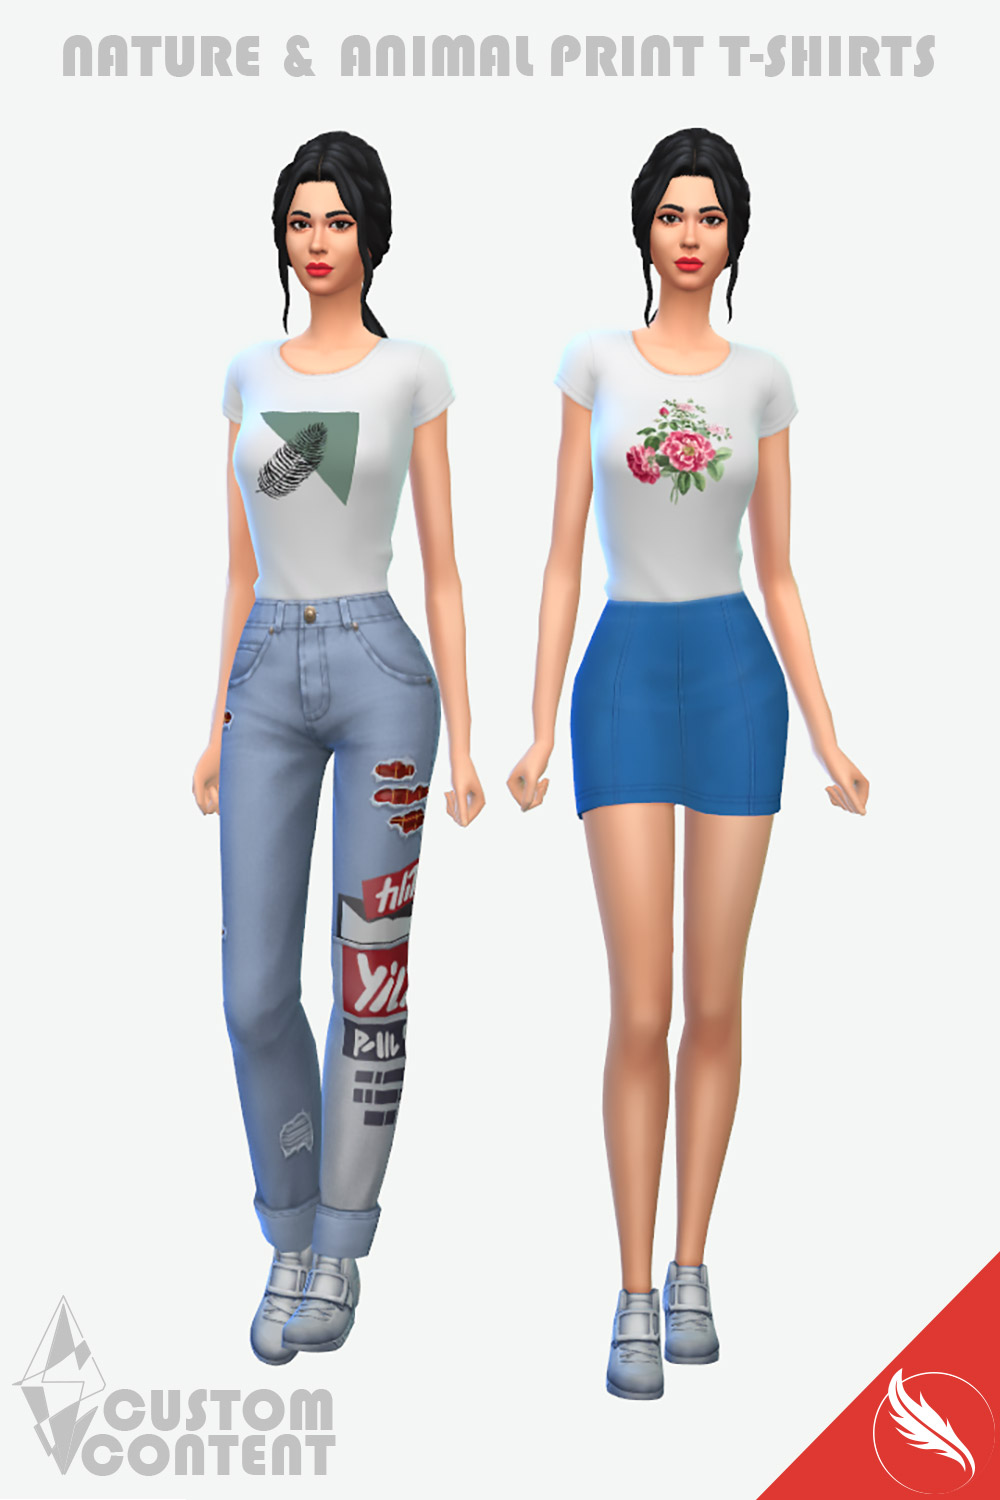 The Sims 4 CC T-Shirts